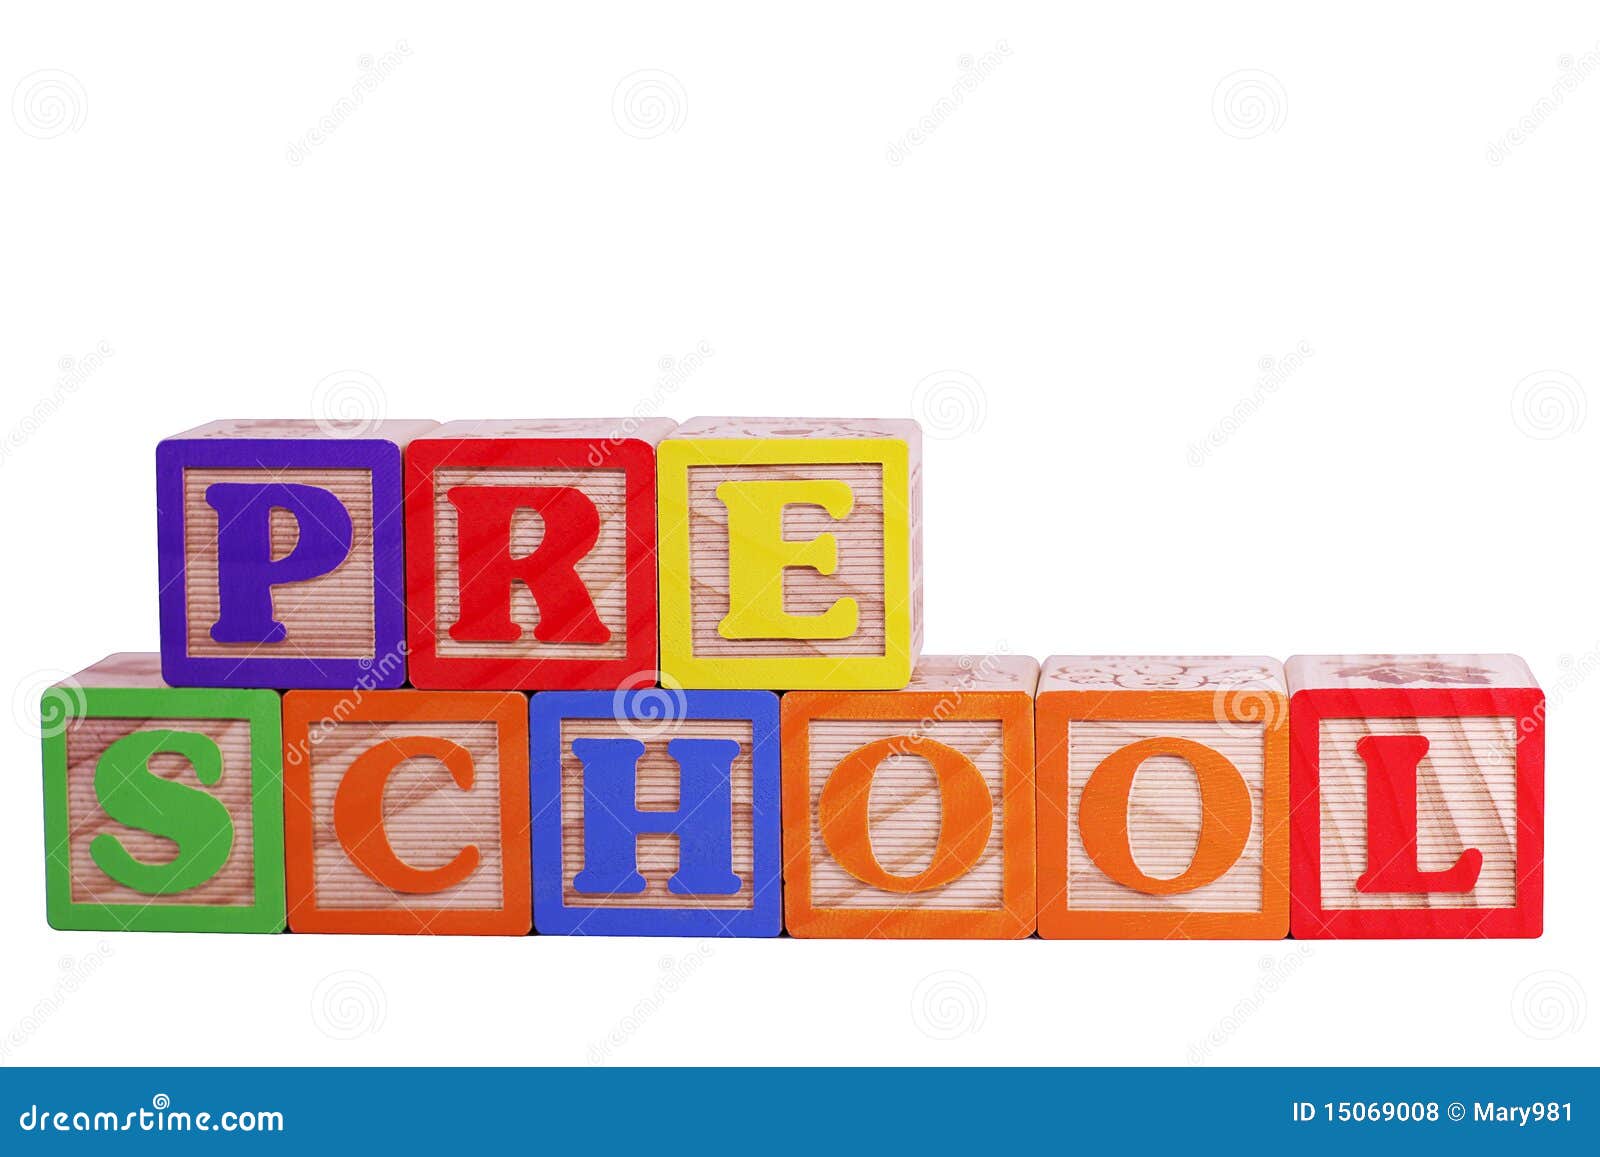 preschool 15069008